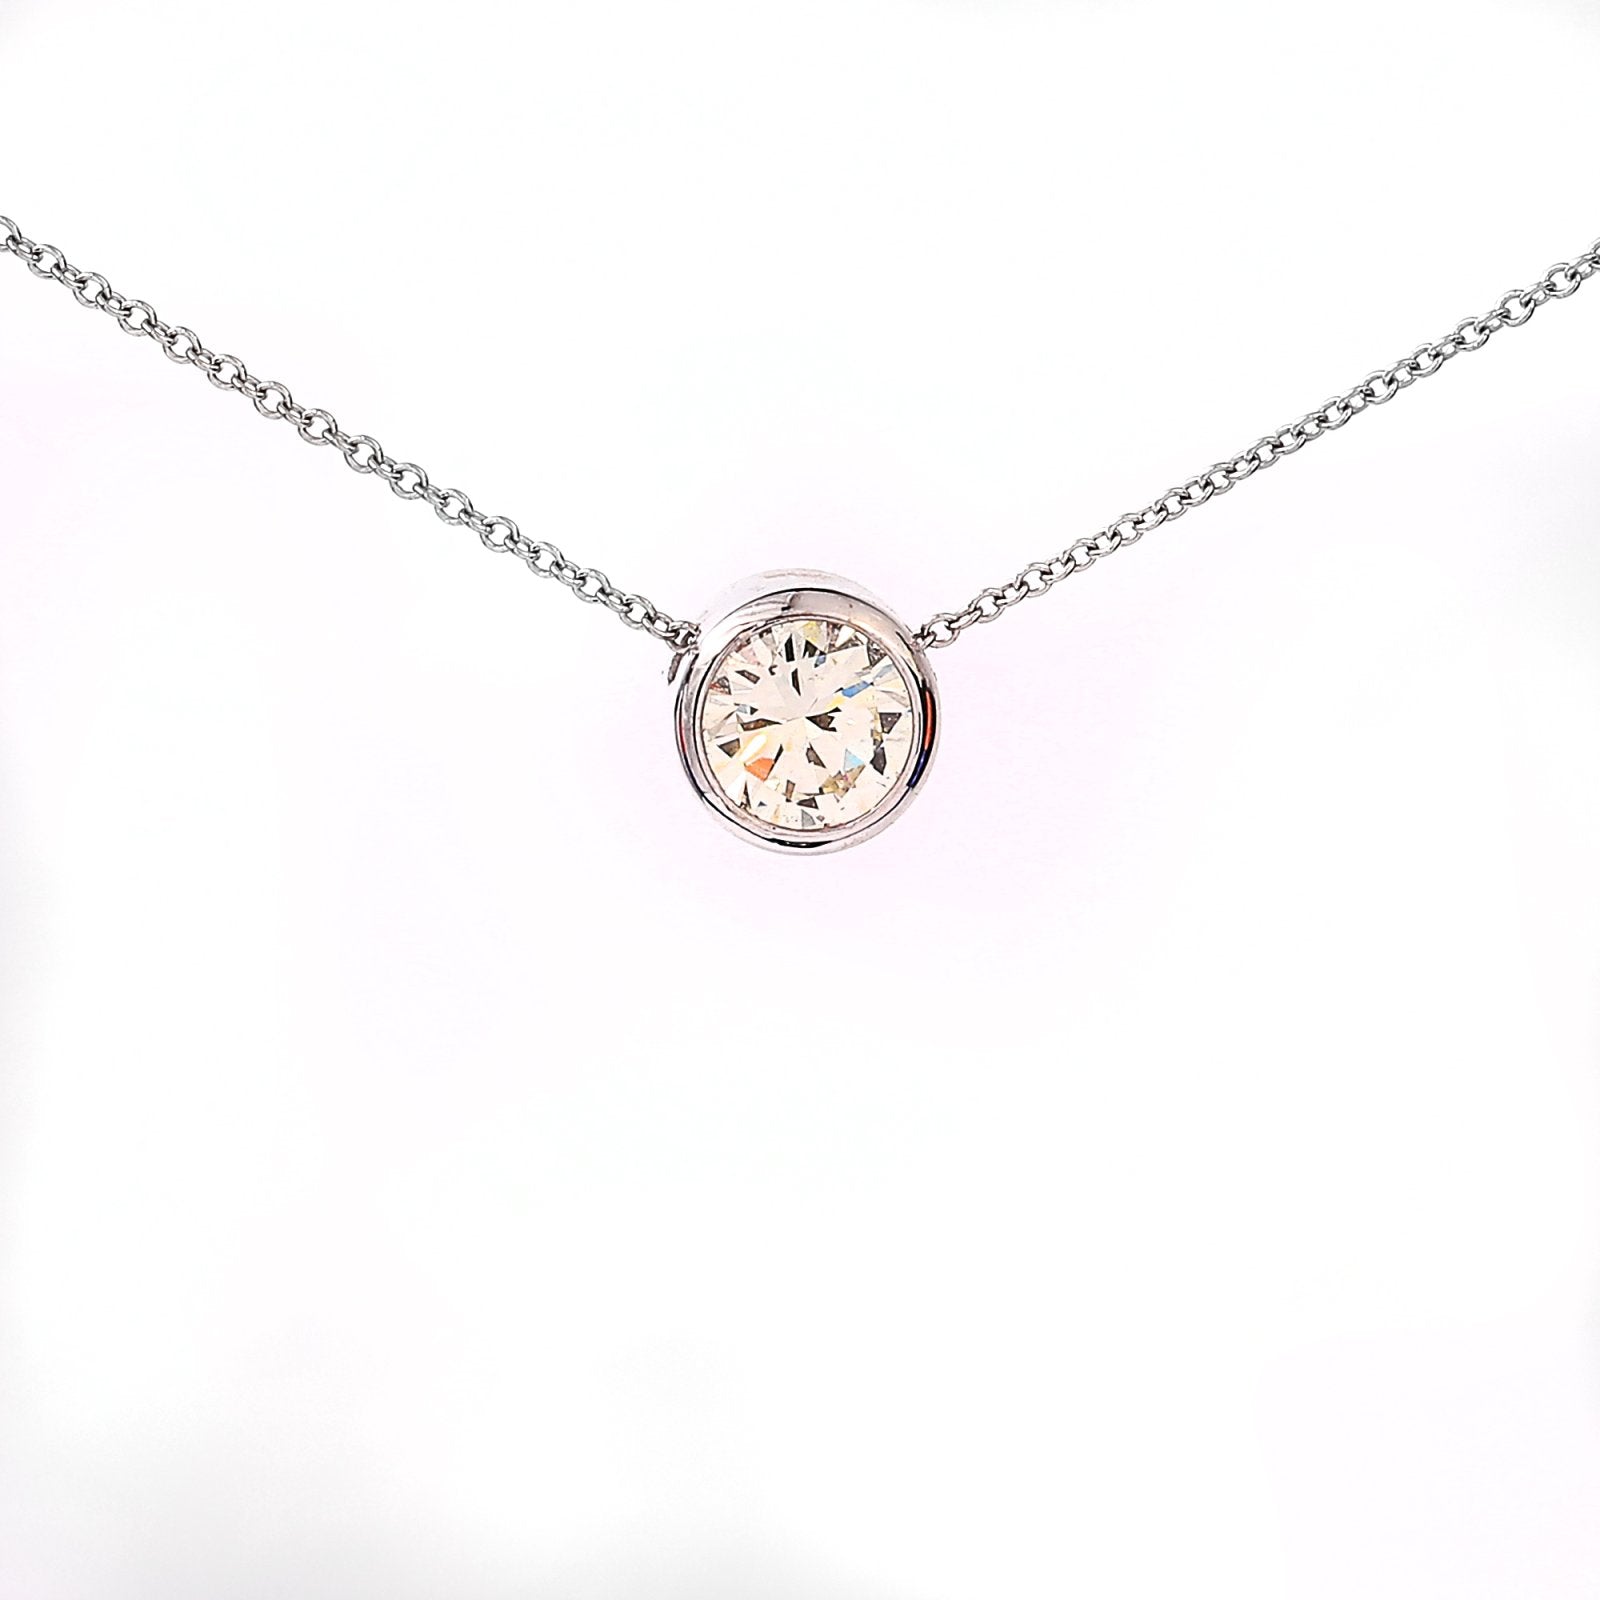 White Gold Solitaire Floating Bezel Set Natural Diamond Necklace 1.08ct VS1 H Total Length: 18"18k2.3gr